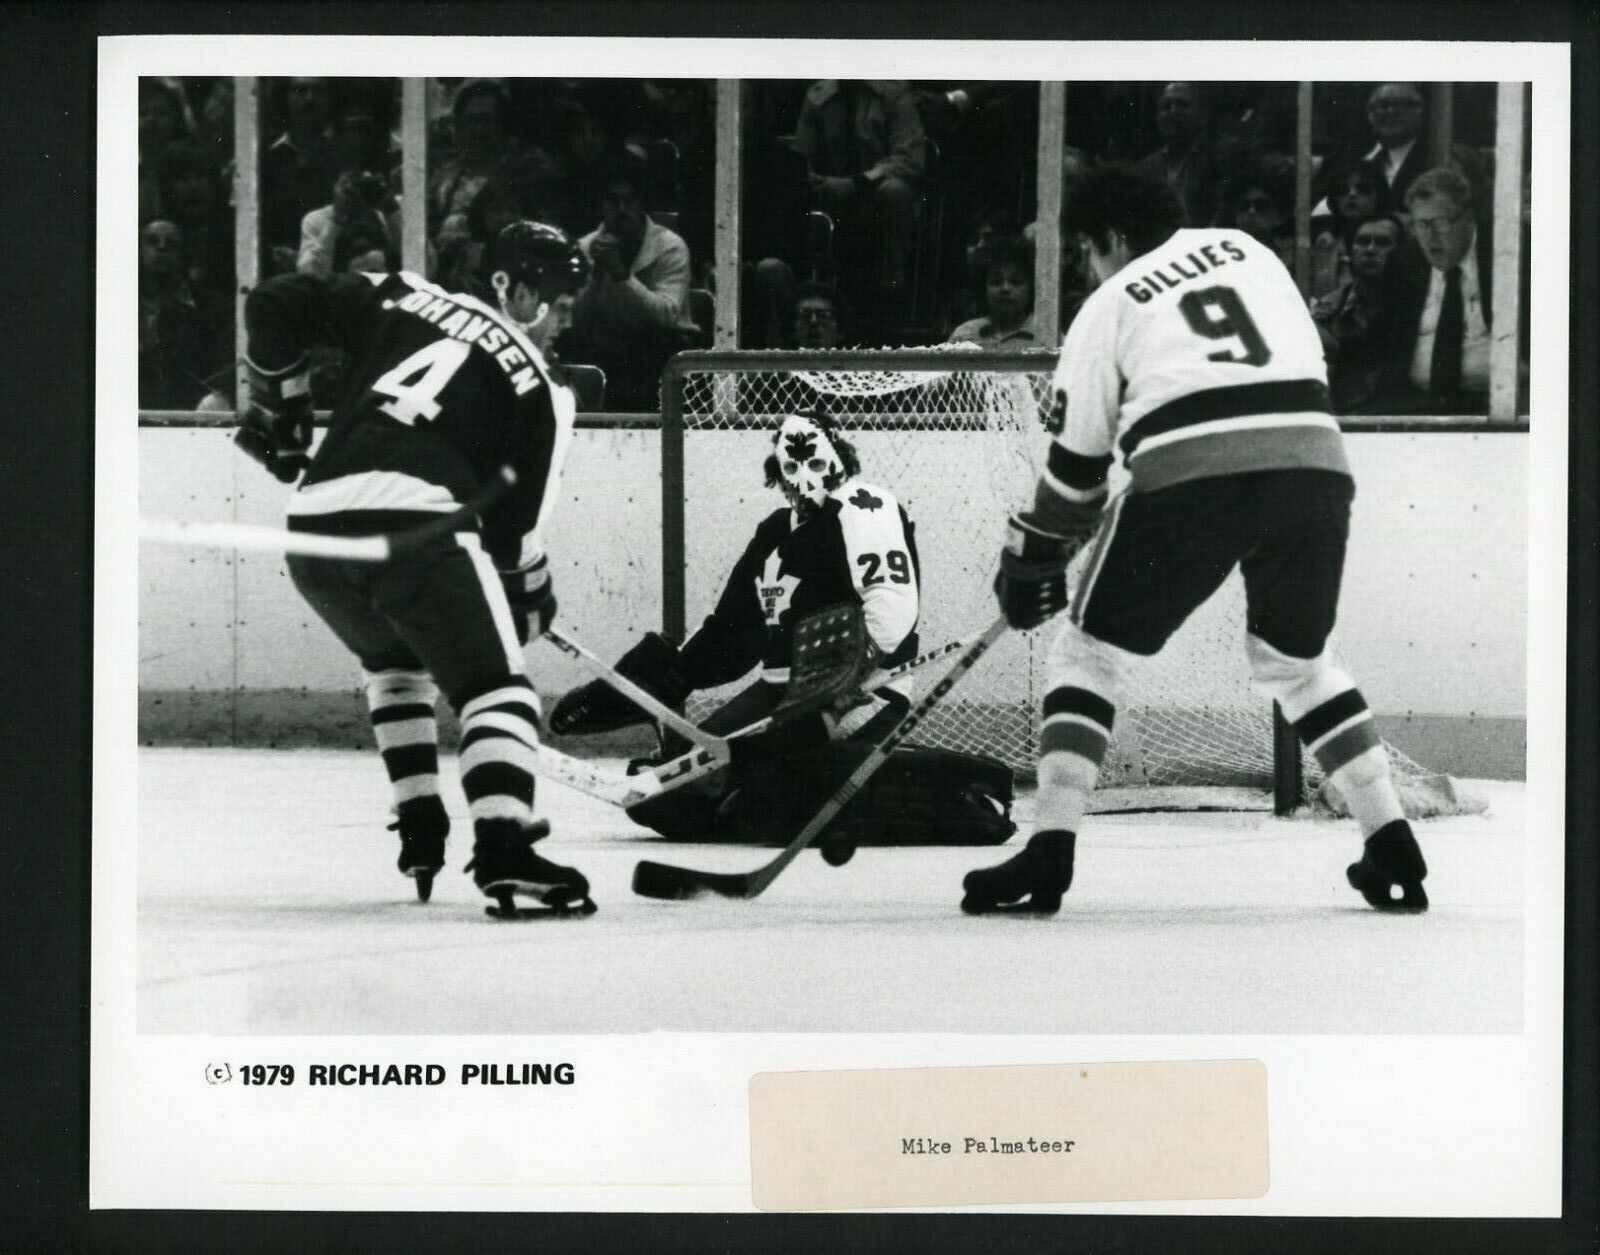 Mike Palmateer & Clark Gillies 1979 Press Photo Poster painting Toronto Maple Leafs vs Islanders